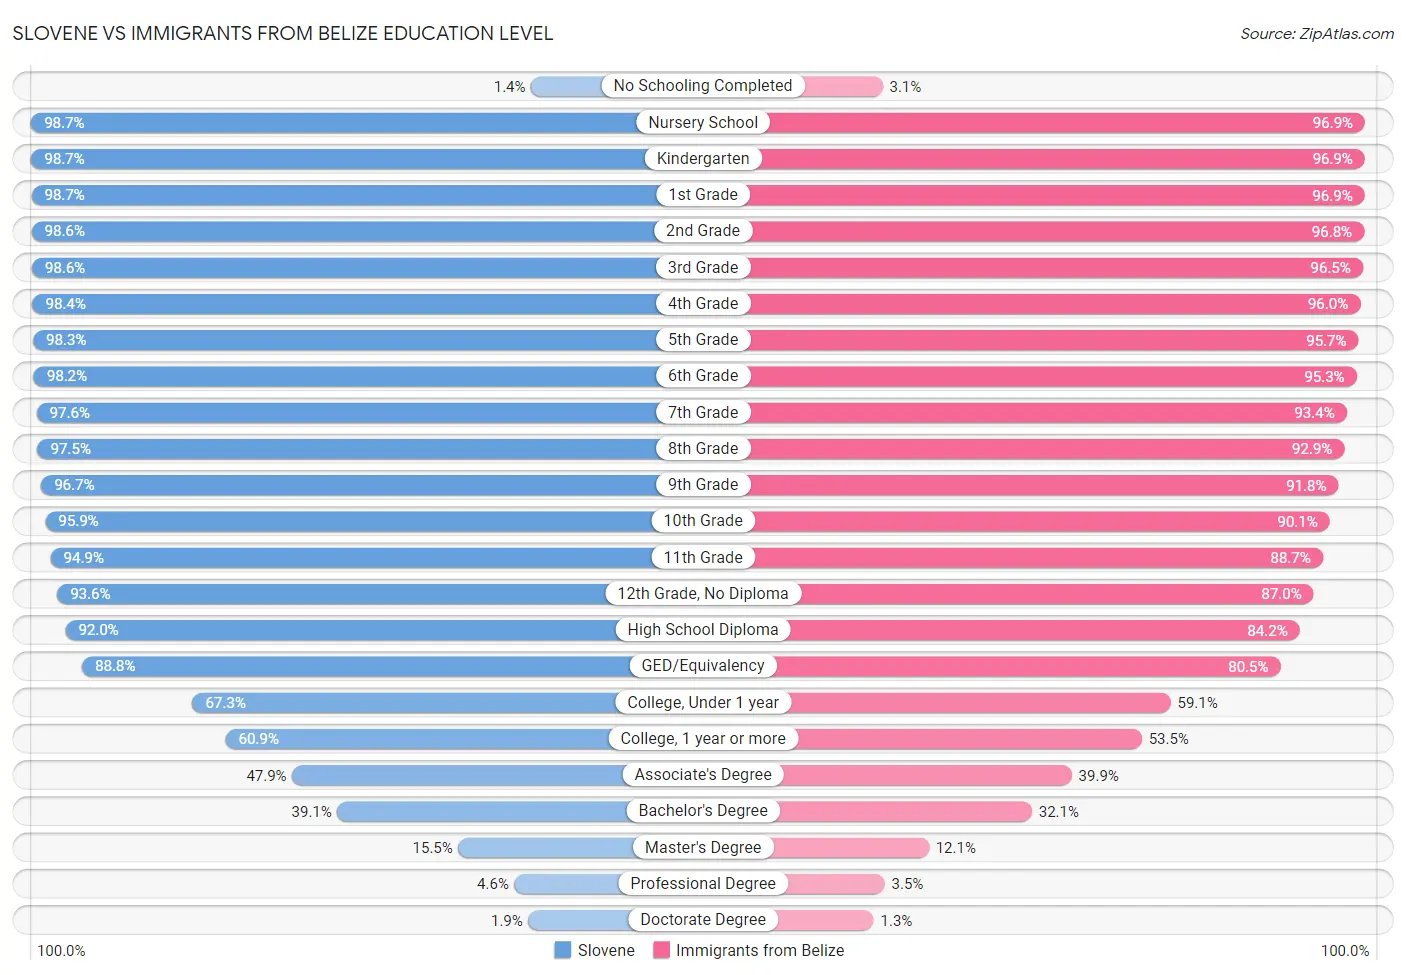 Slovene vs Immigrants from Belize Education Level